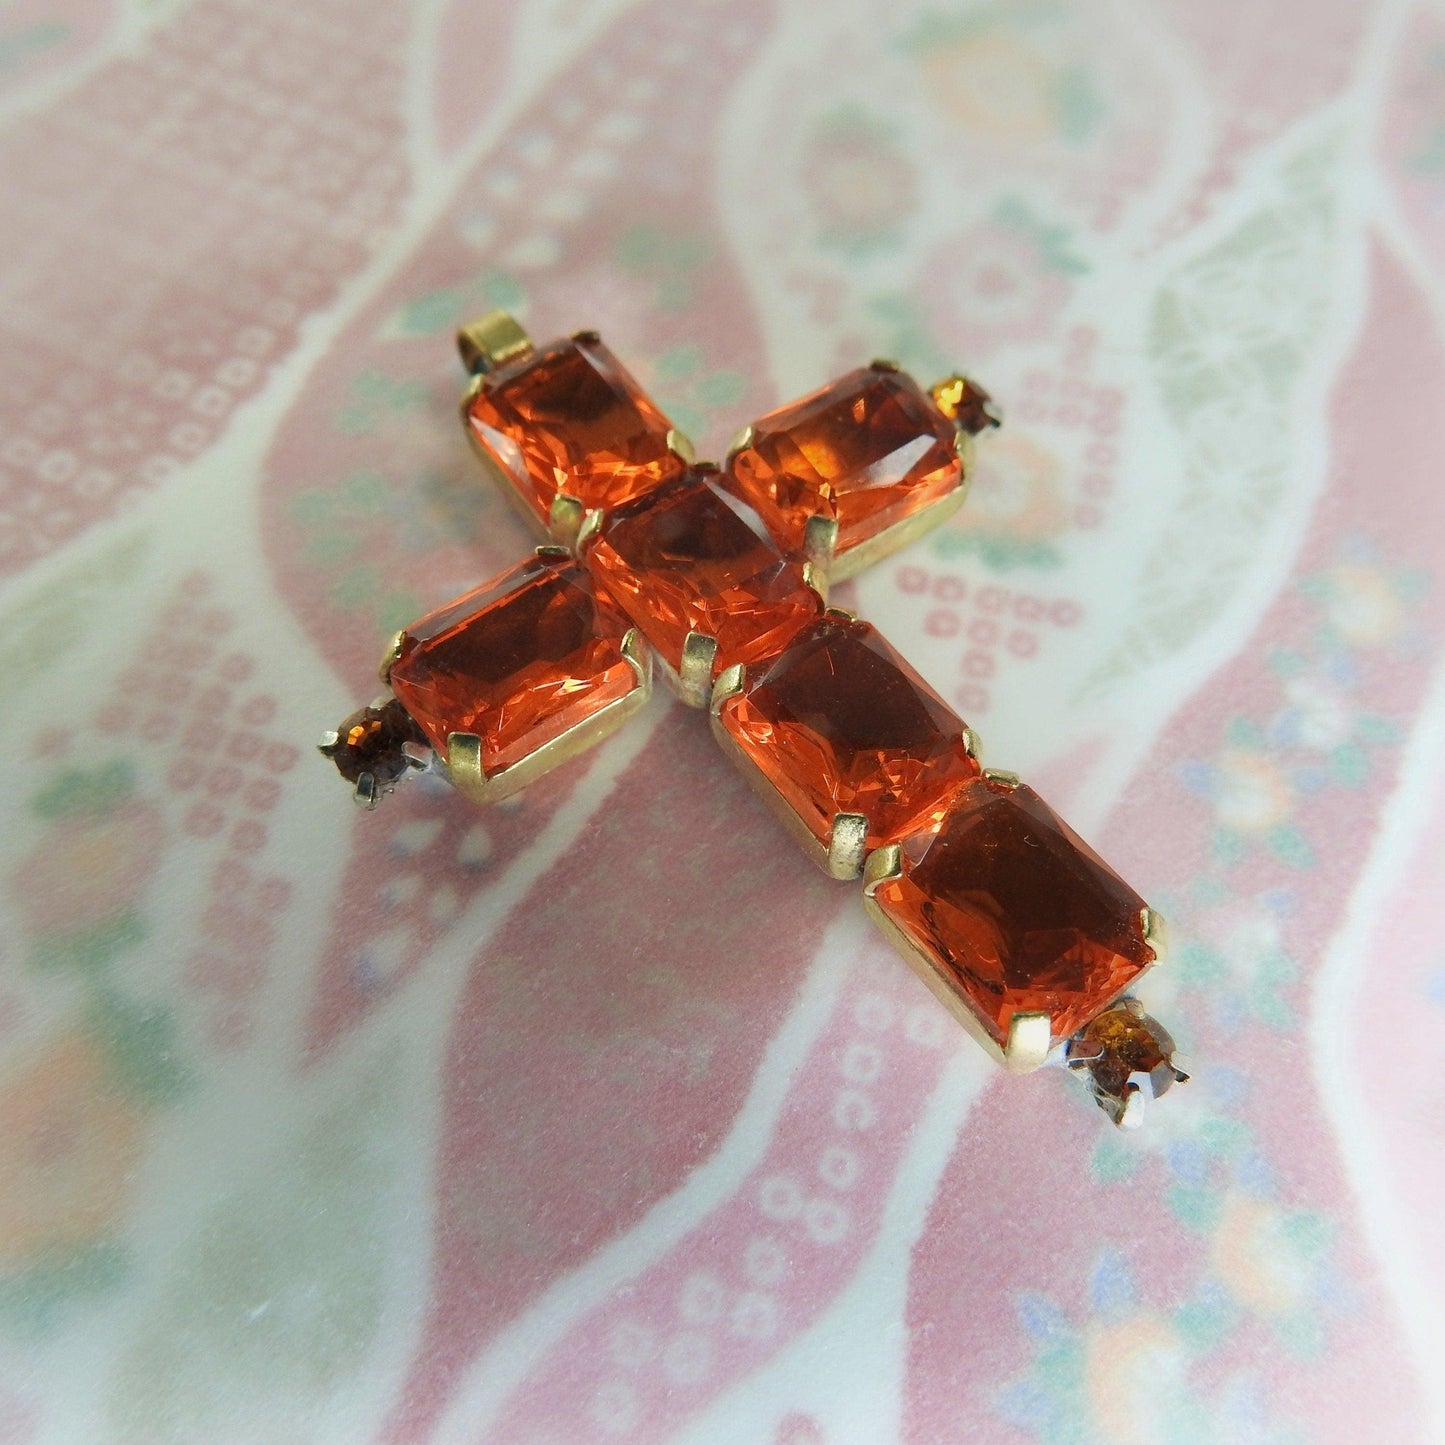 Orange glass pendant for necklace diy, catholic roman cross jewelry, unique catholic jewelry, crystal glass cross ornament, baptism gifts